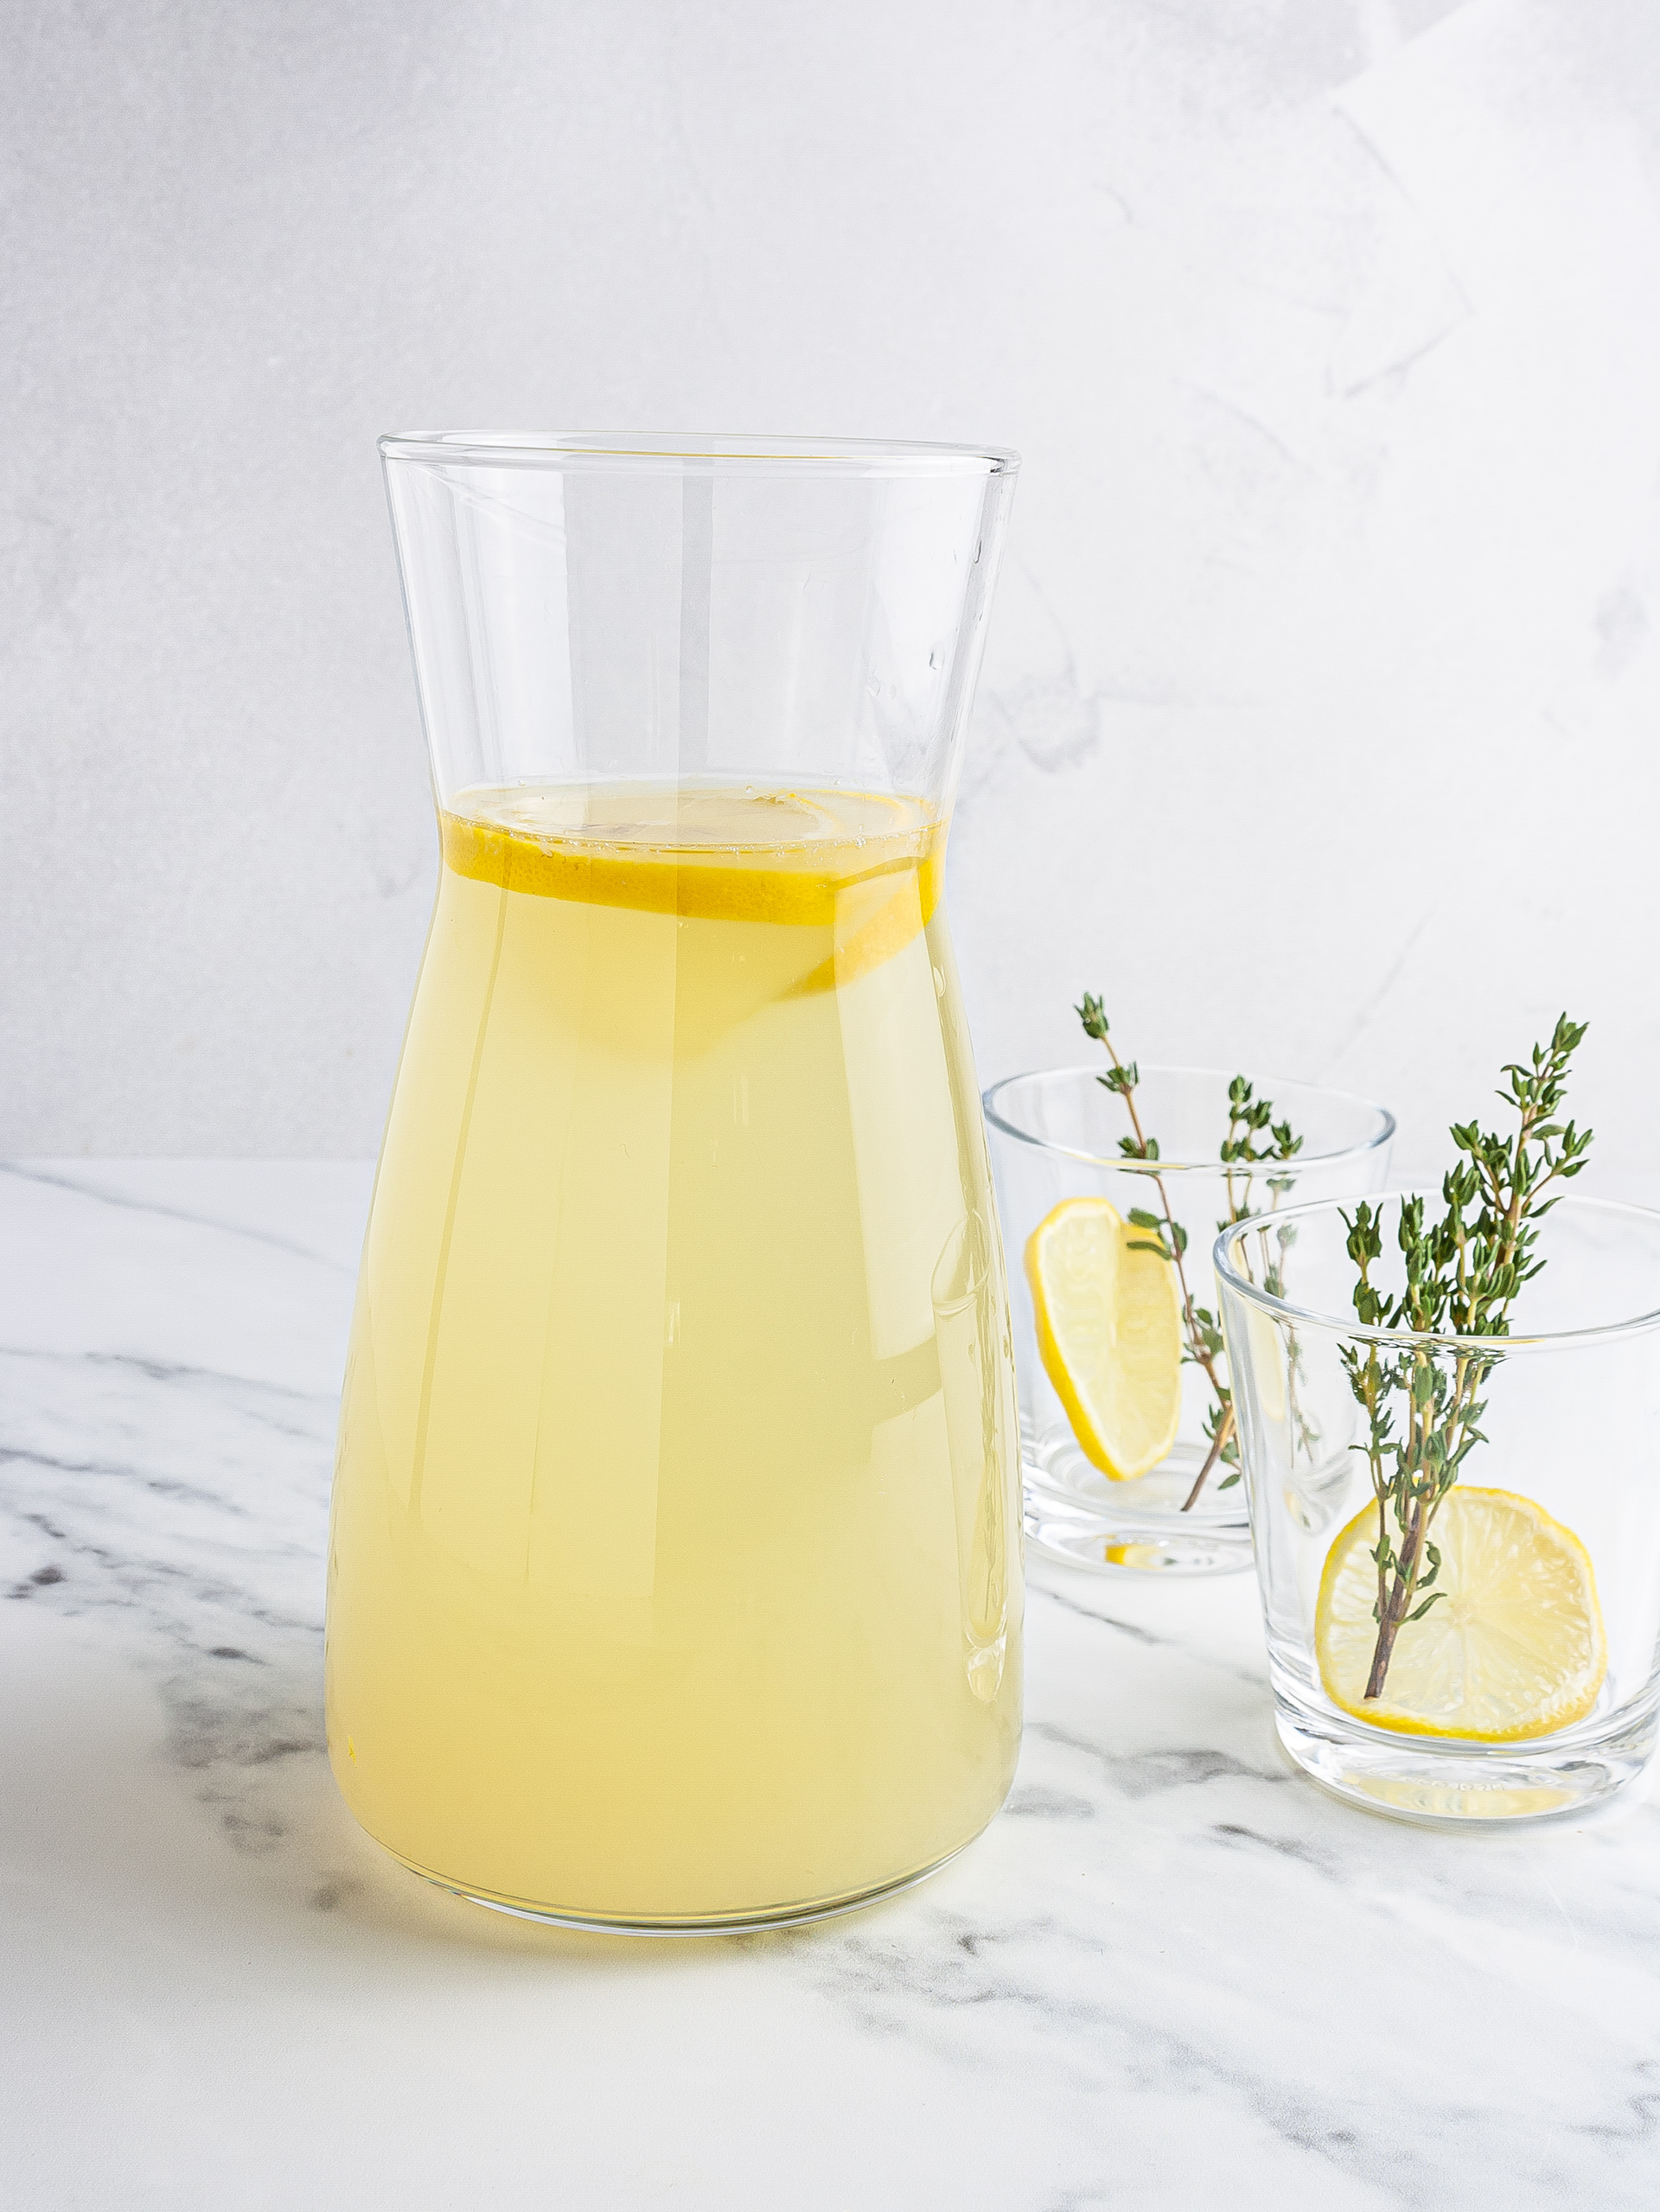 Ginger thyme lemonade in a jug